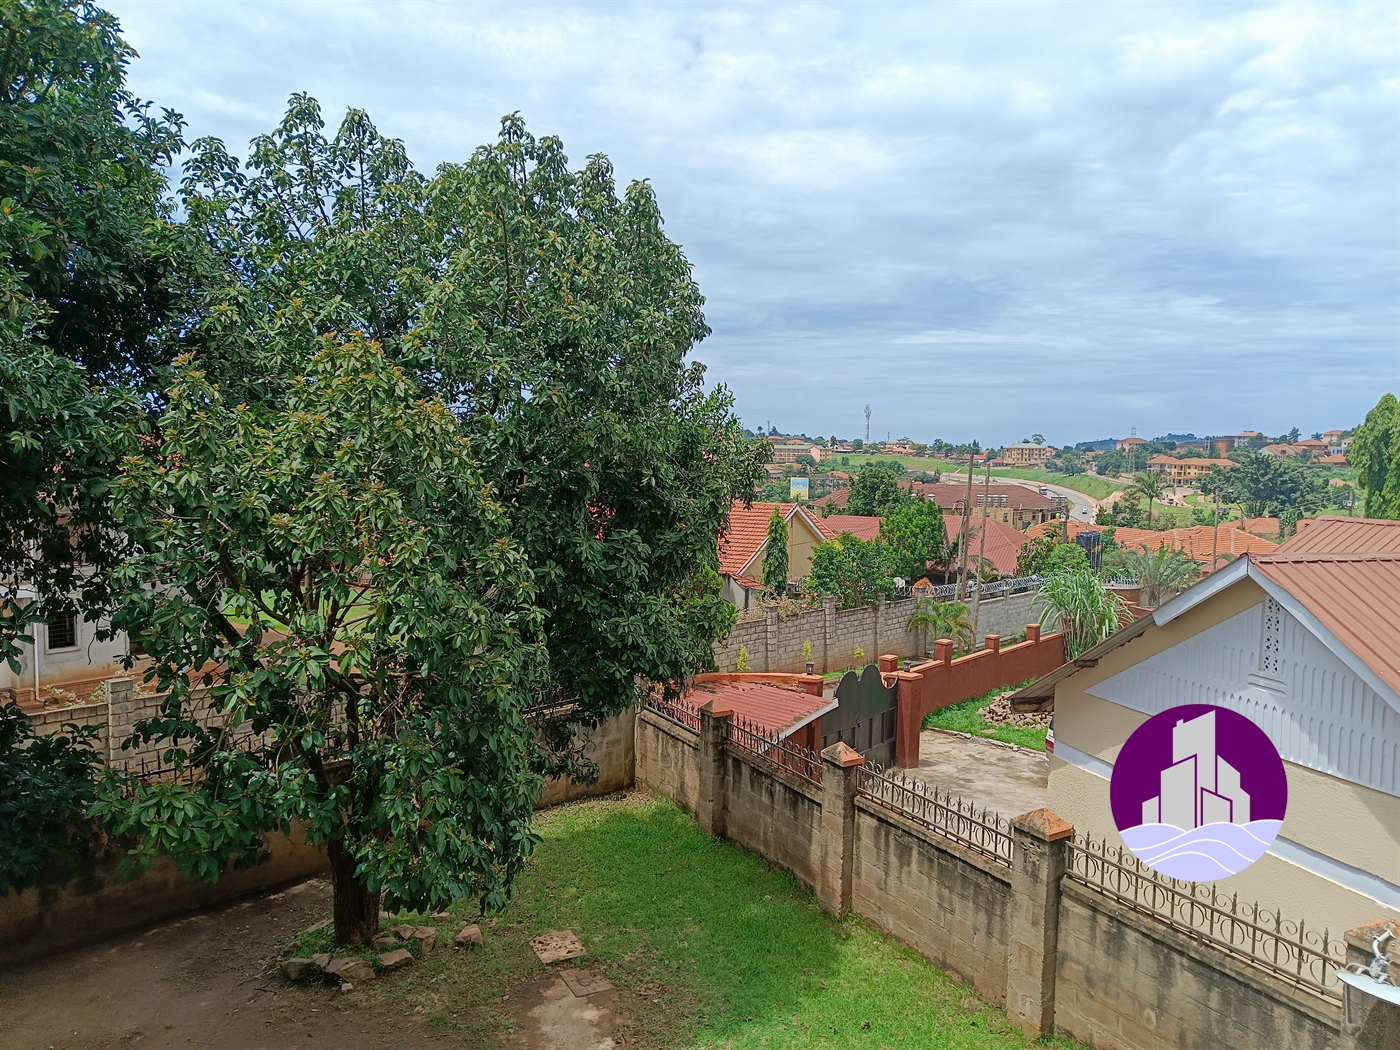 Storeyed house for rent in Kiwaatule Kampala